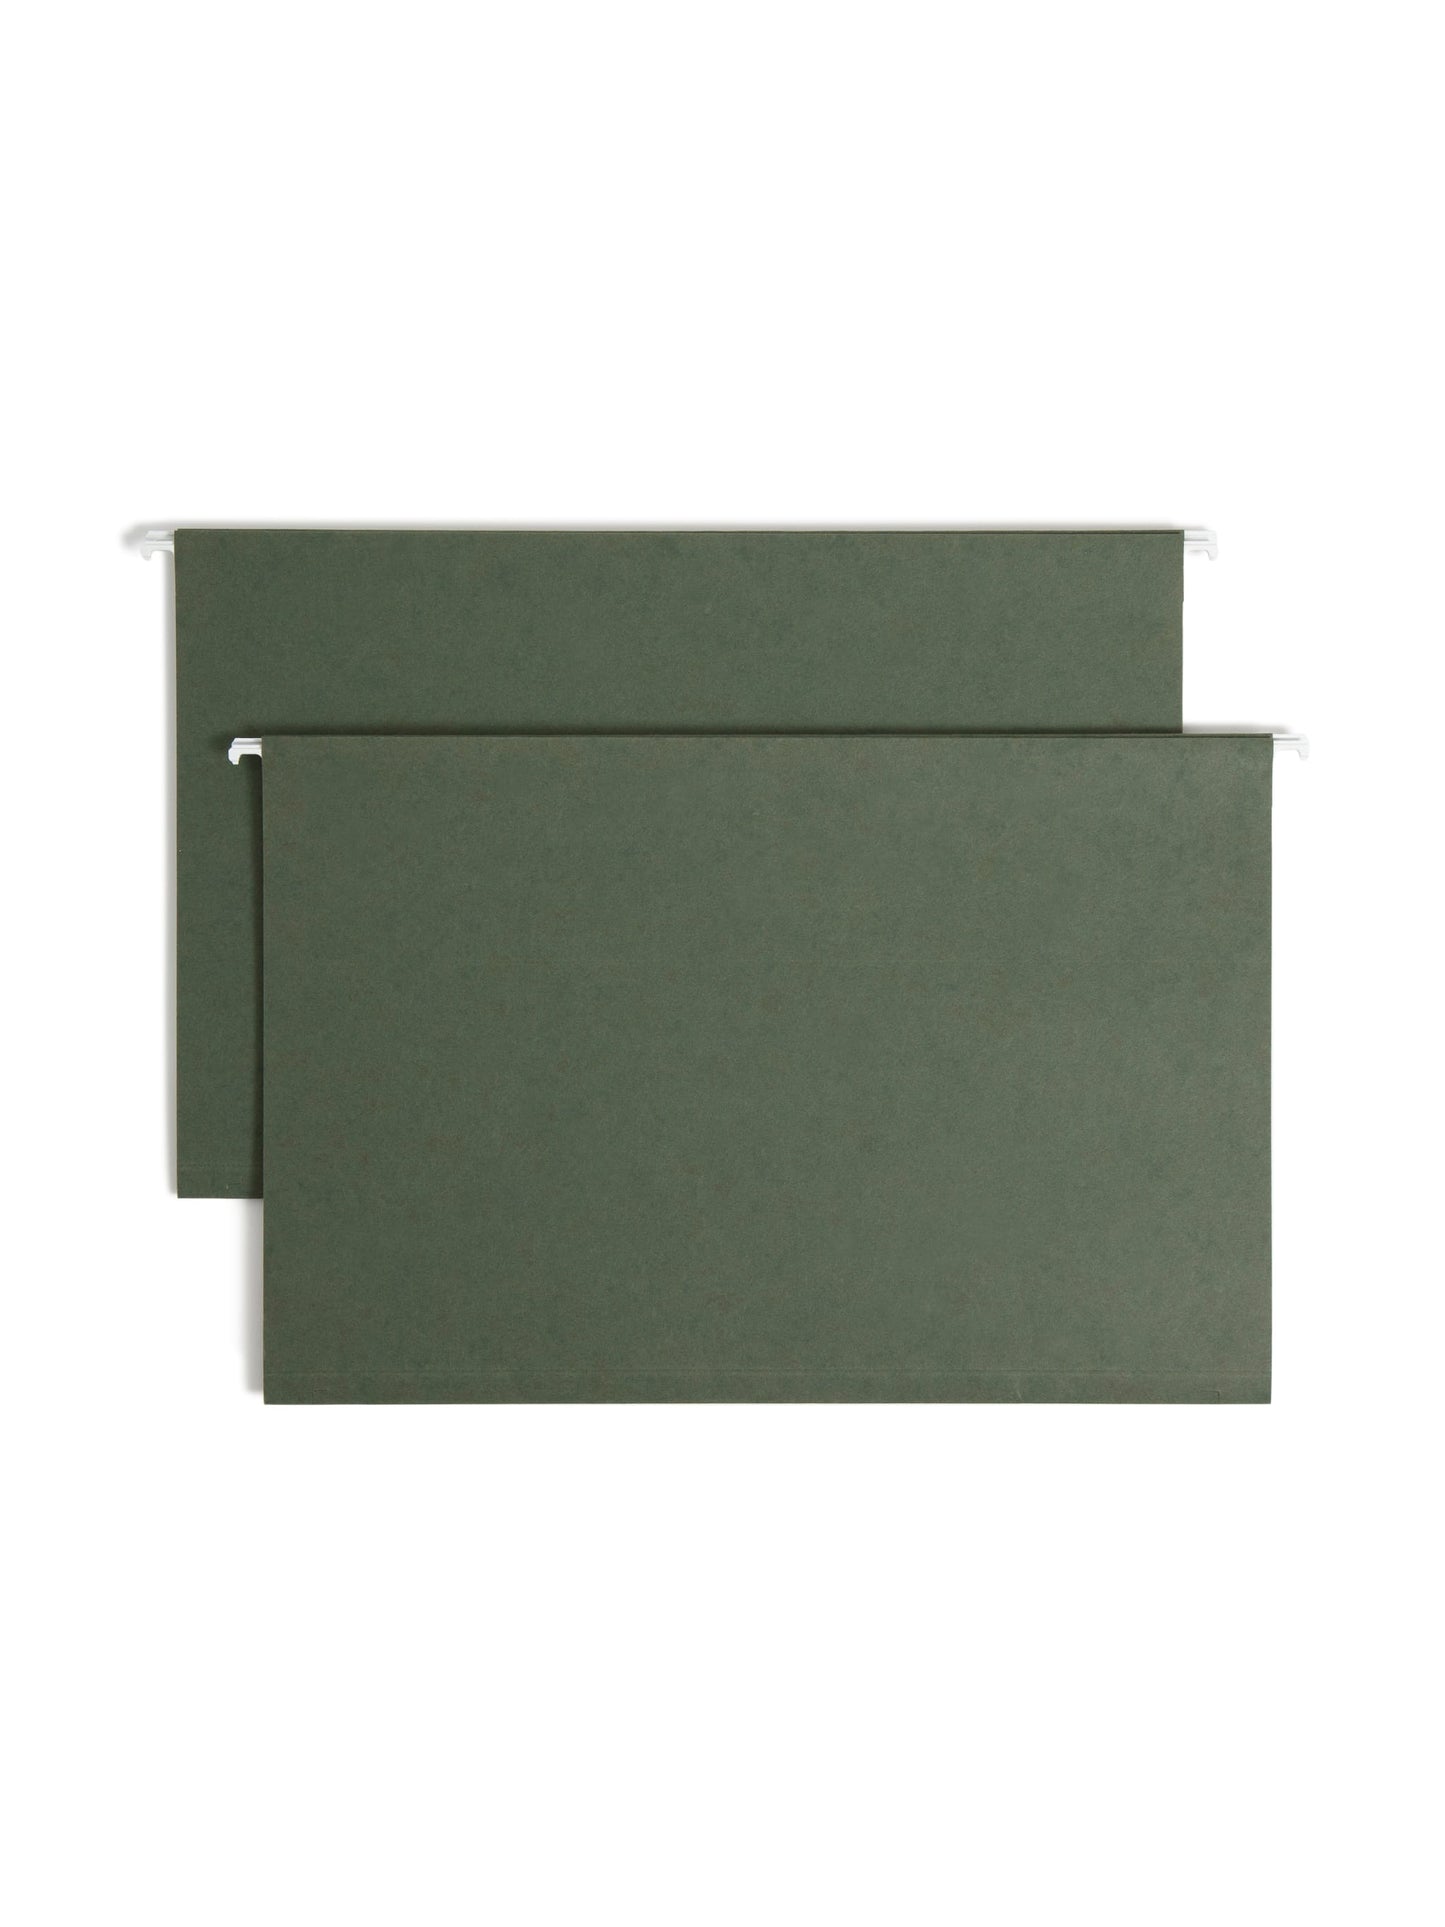 Hanging Box Bottom File Folders, 1 inch Expansion, Standard Green Color, Legal Size, Set of 25, 086486643399